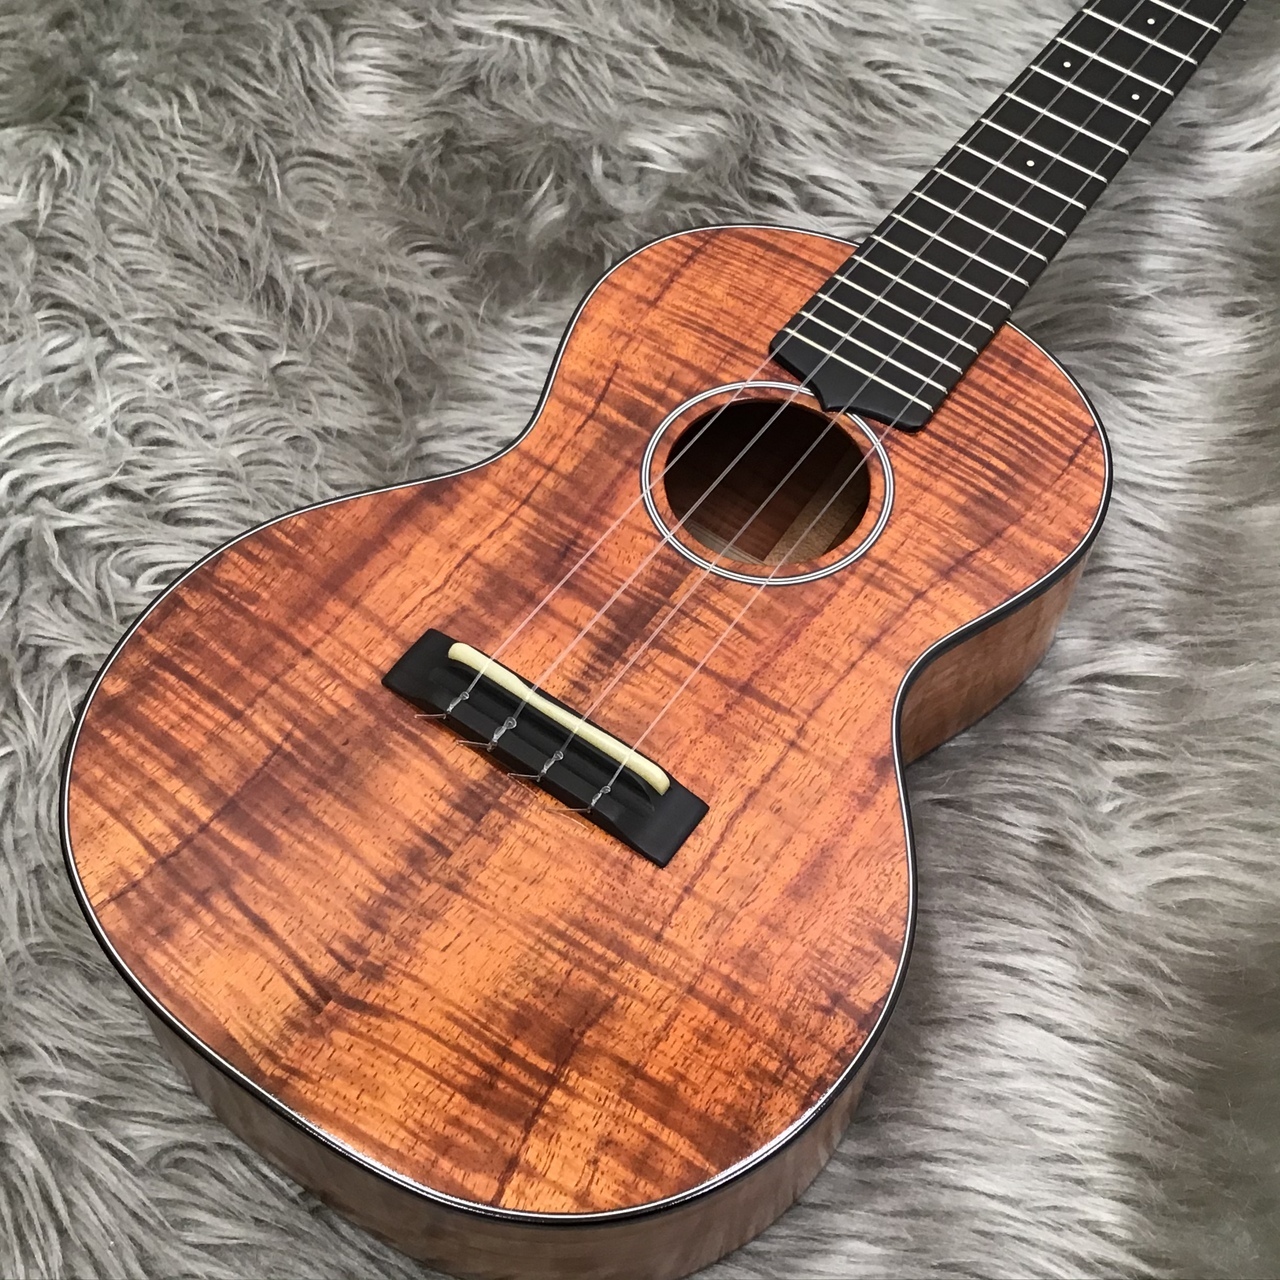 tkitki ukulele (ティキティキウクレレ)HK-C5A Pink Koa/ピンク